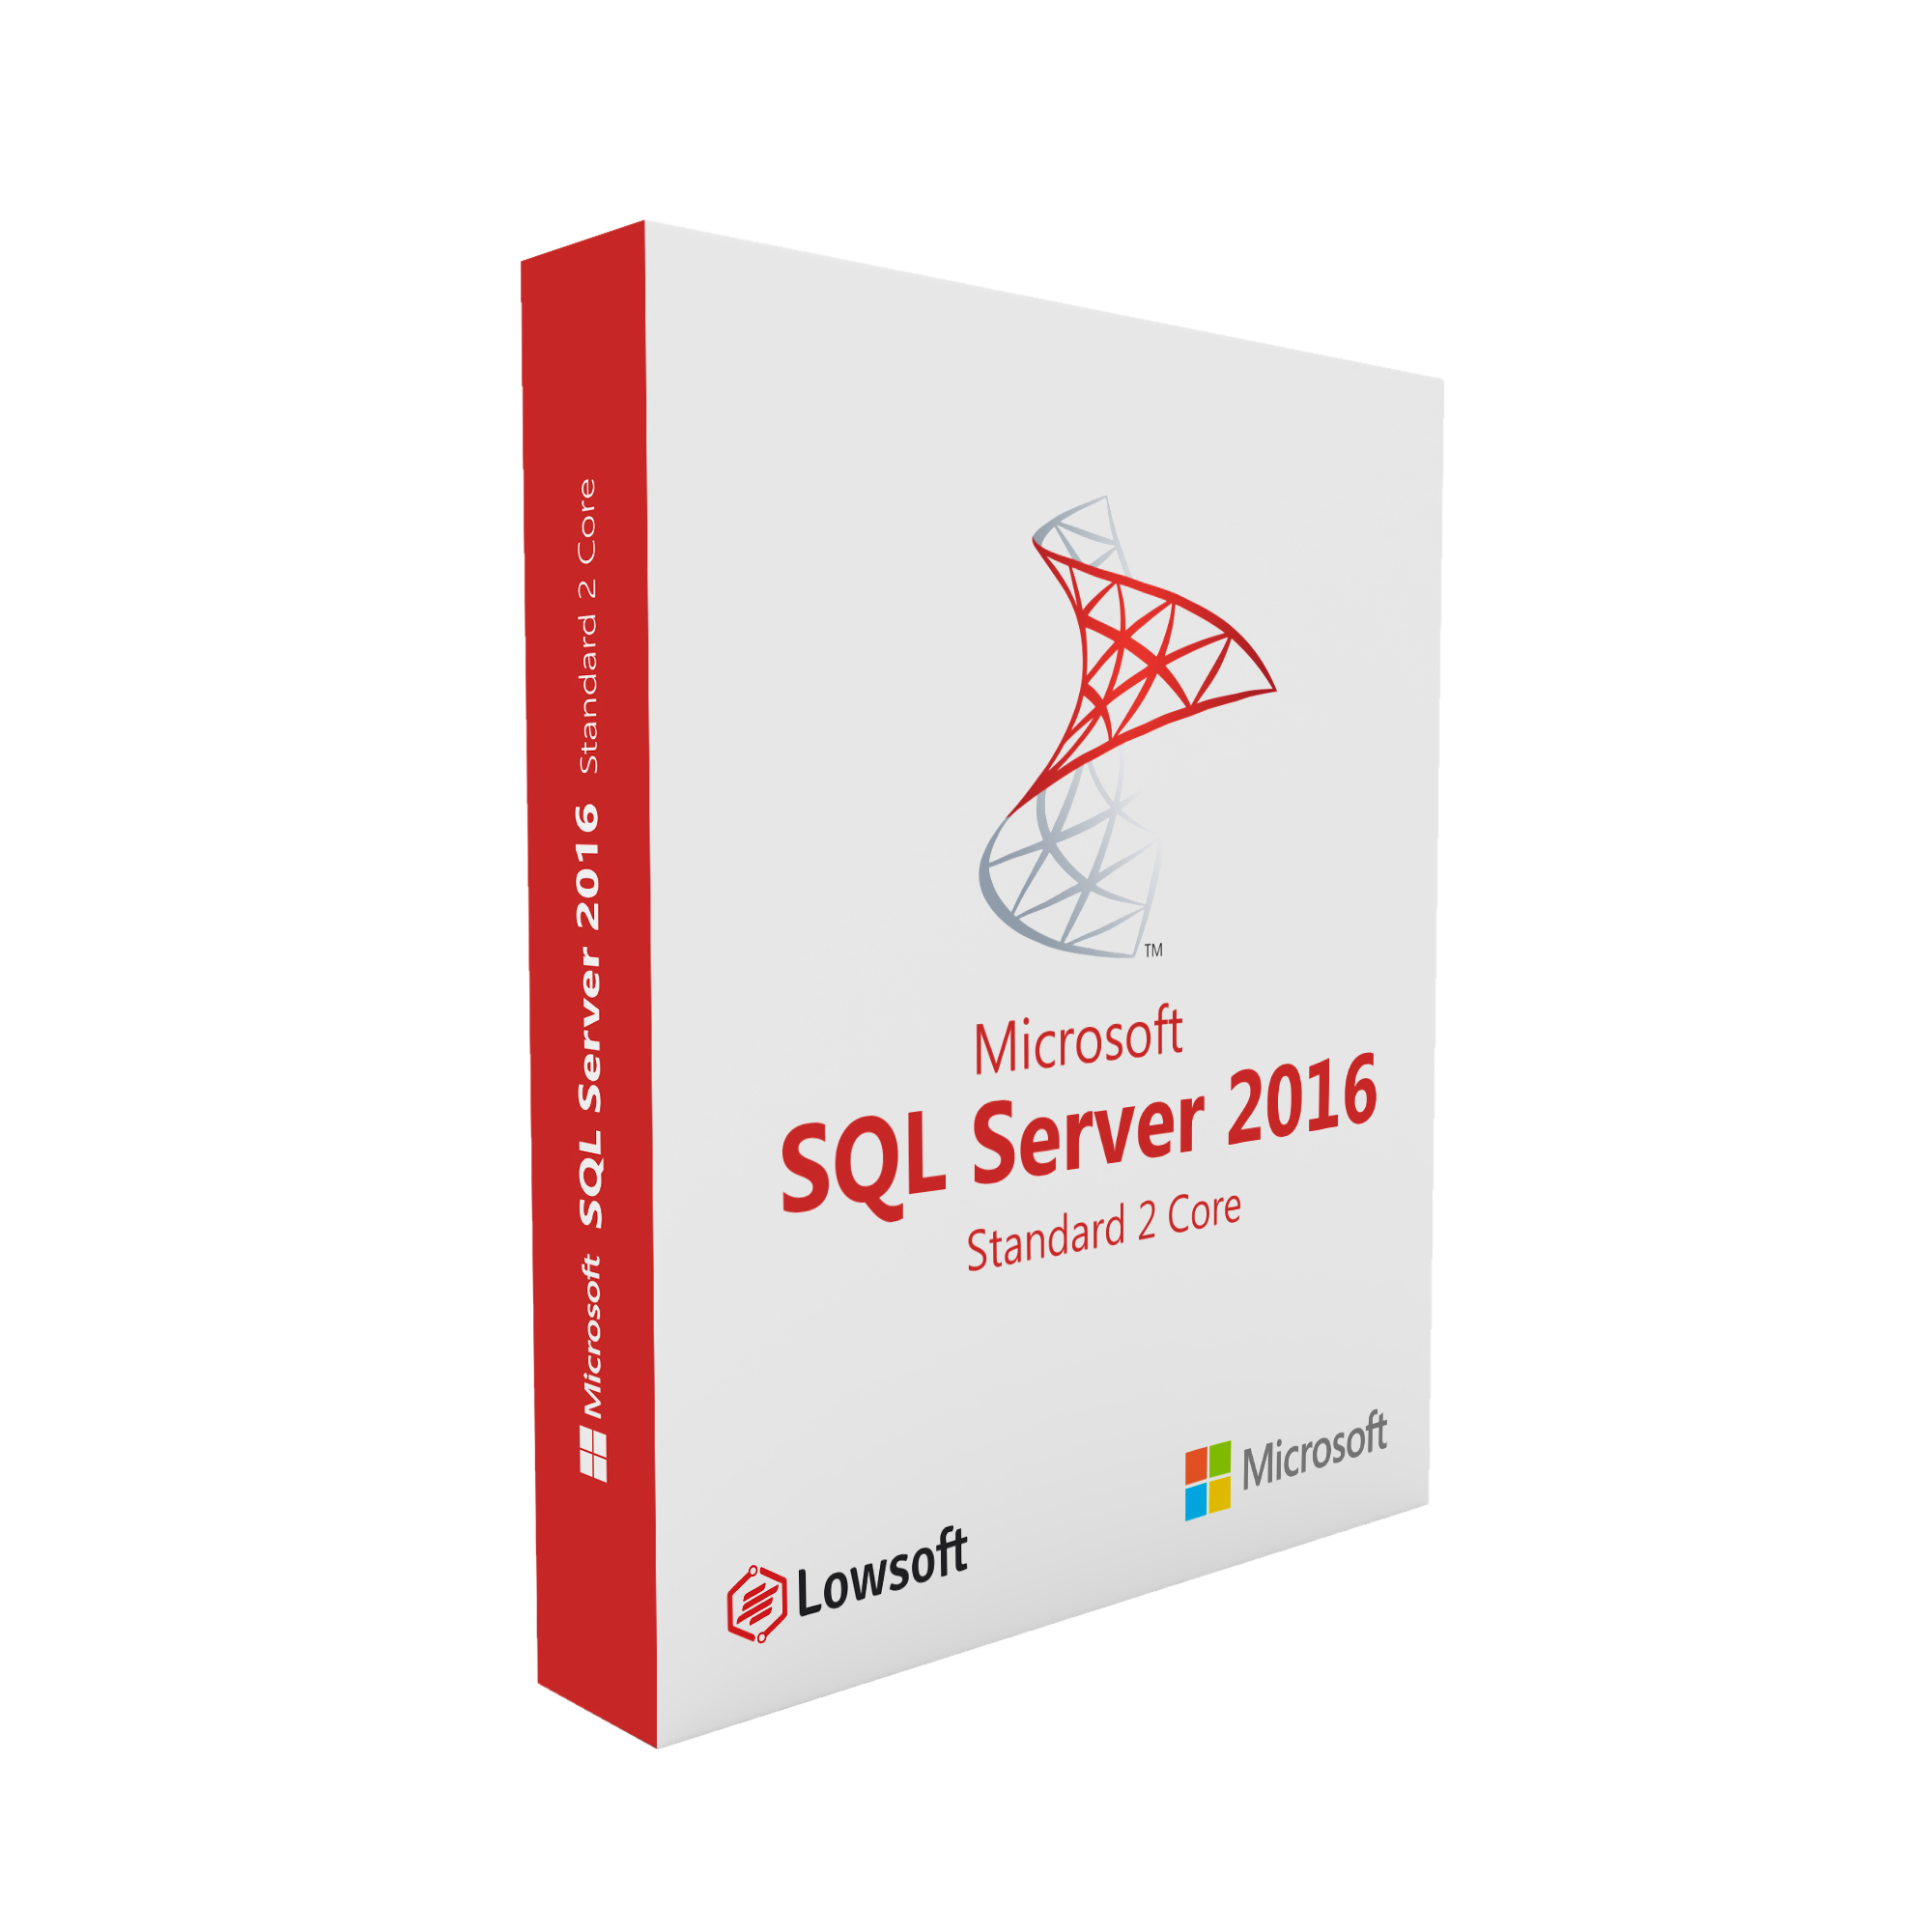 SQL Server 2016 Standard (2 Core)